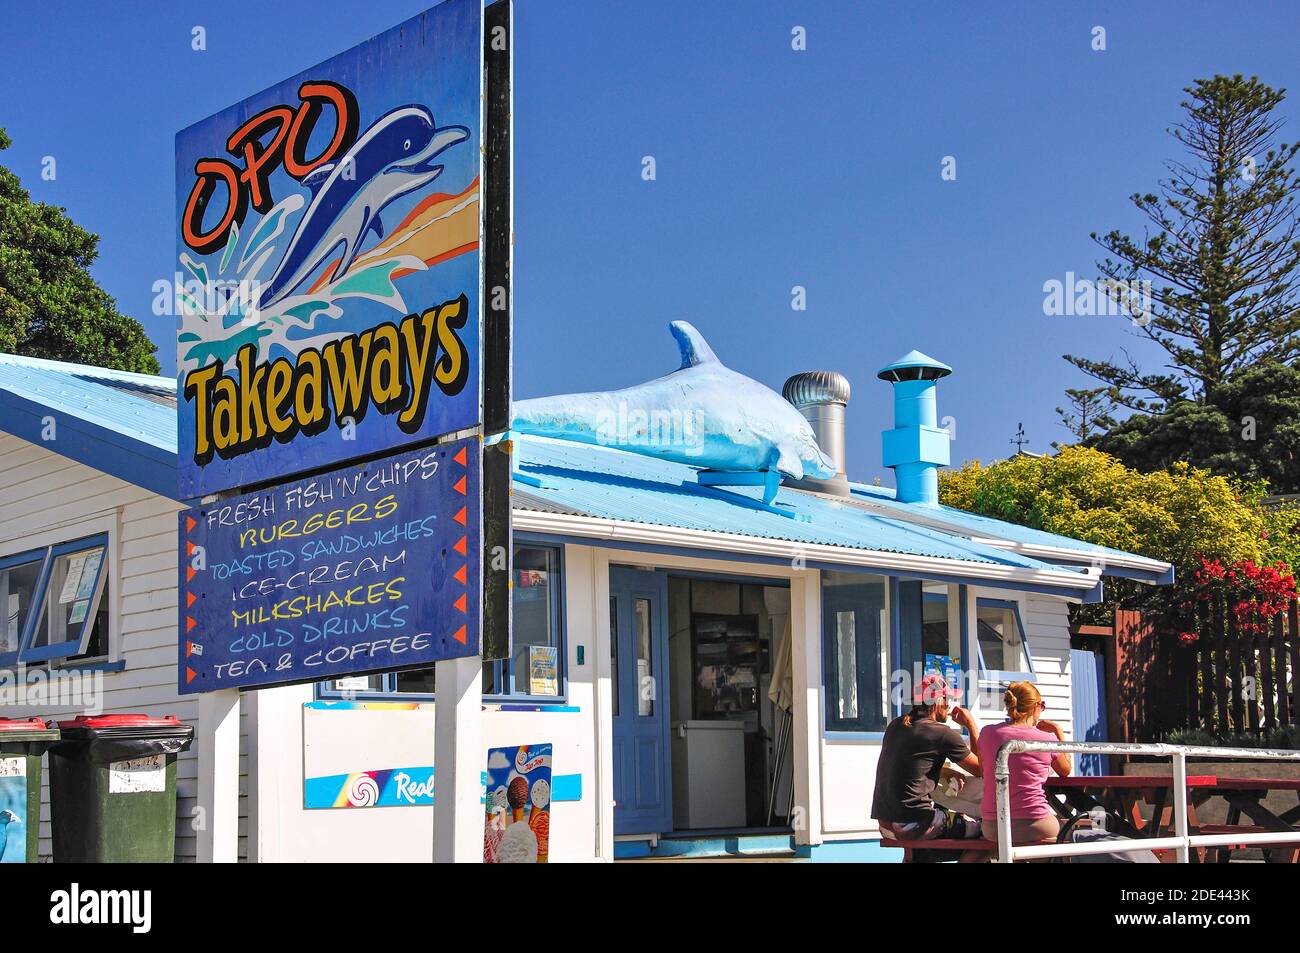 Opo takeaways shop on foreshore, Opononi, Northland Region, North Island, New Zealand Stock Photo